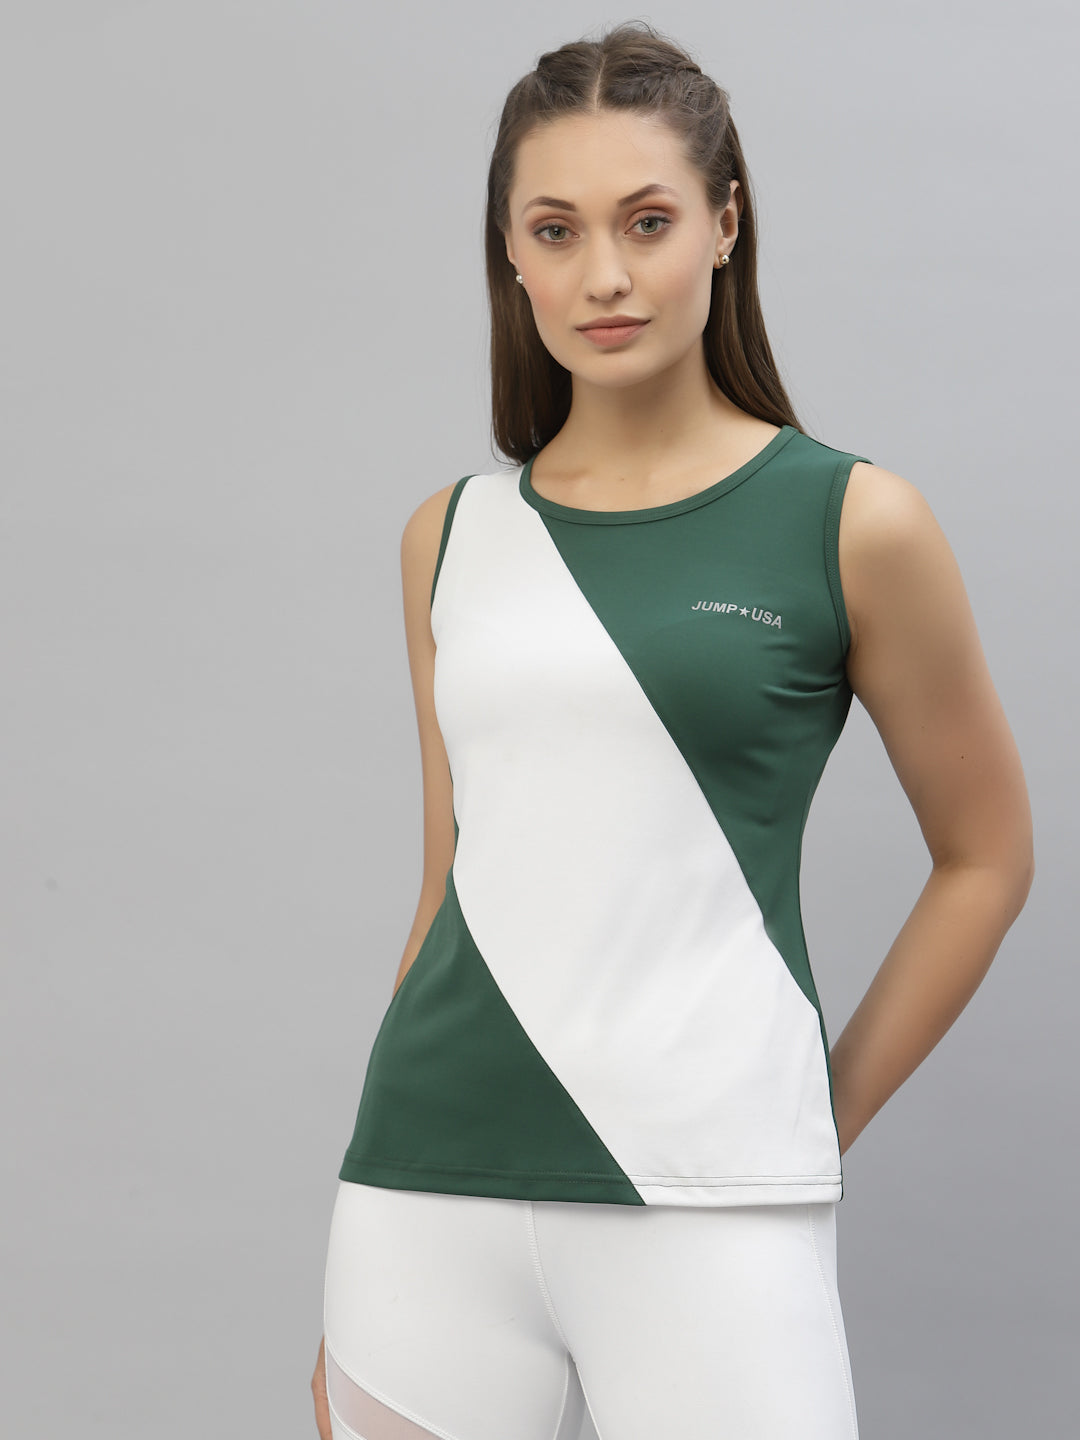 Women's Workout Tanks & Sleeveless T-Shirts in Green